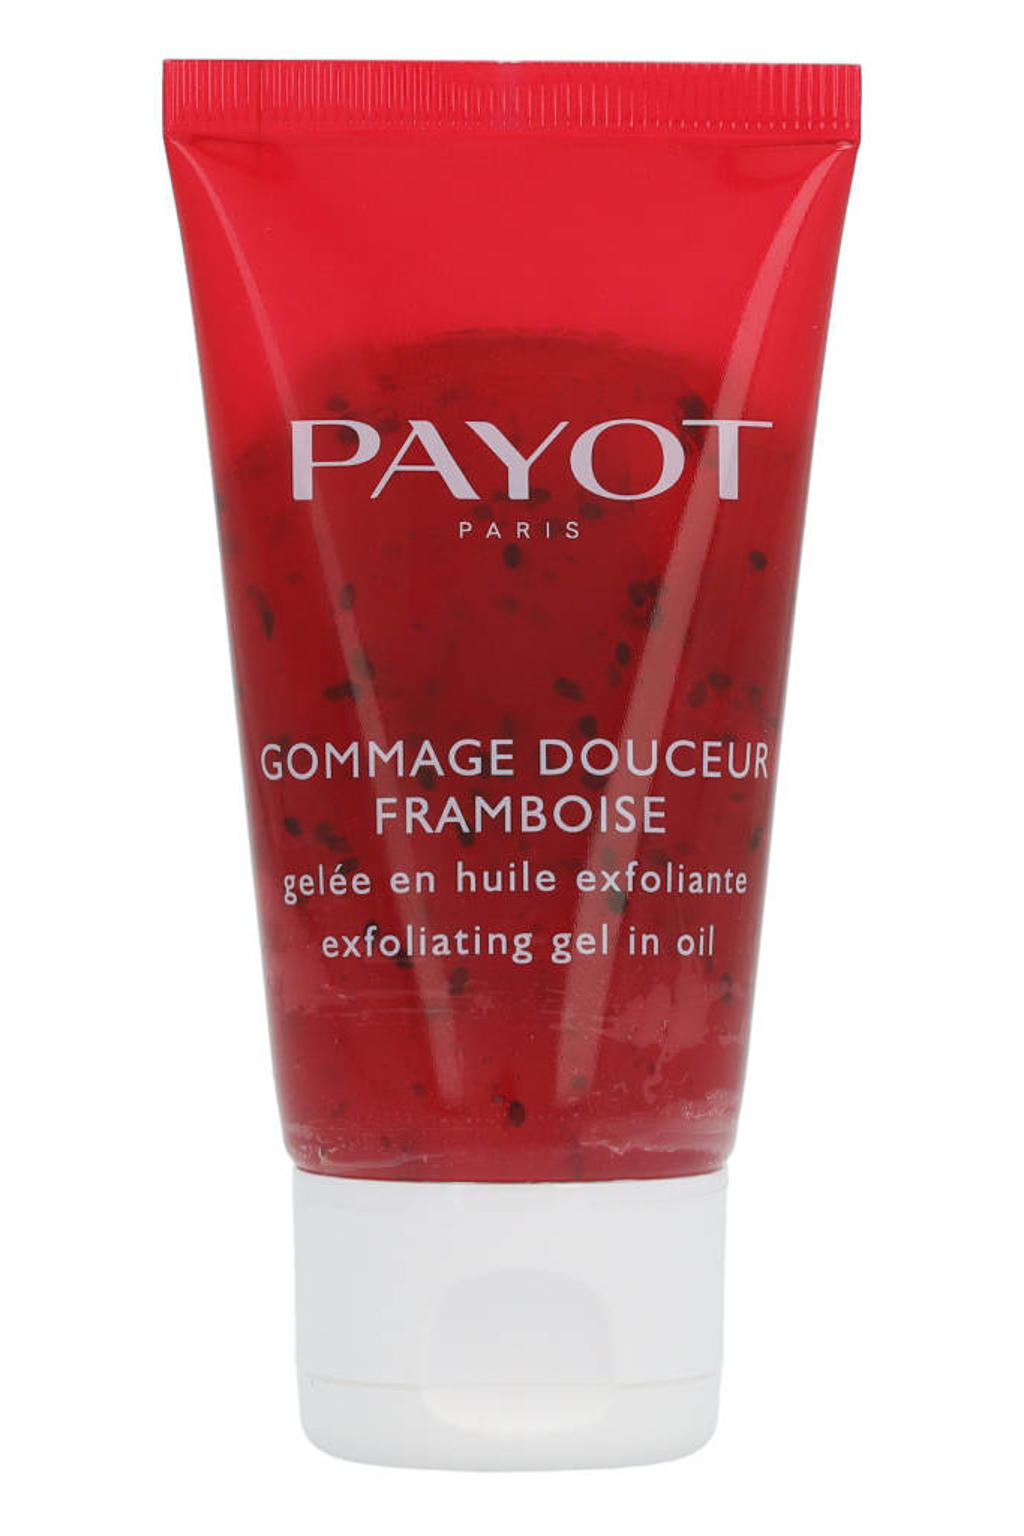 Payot Gommage Douceur Framboise gezichtsscrub - 50 ml